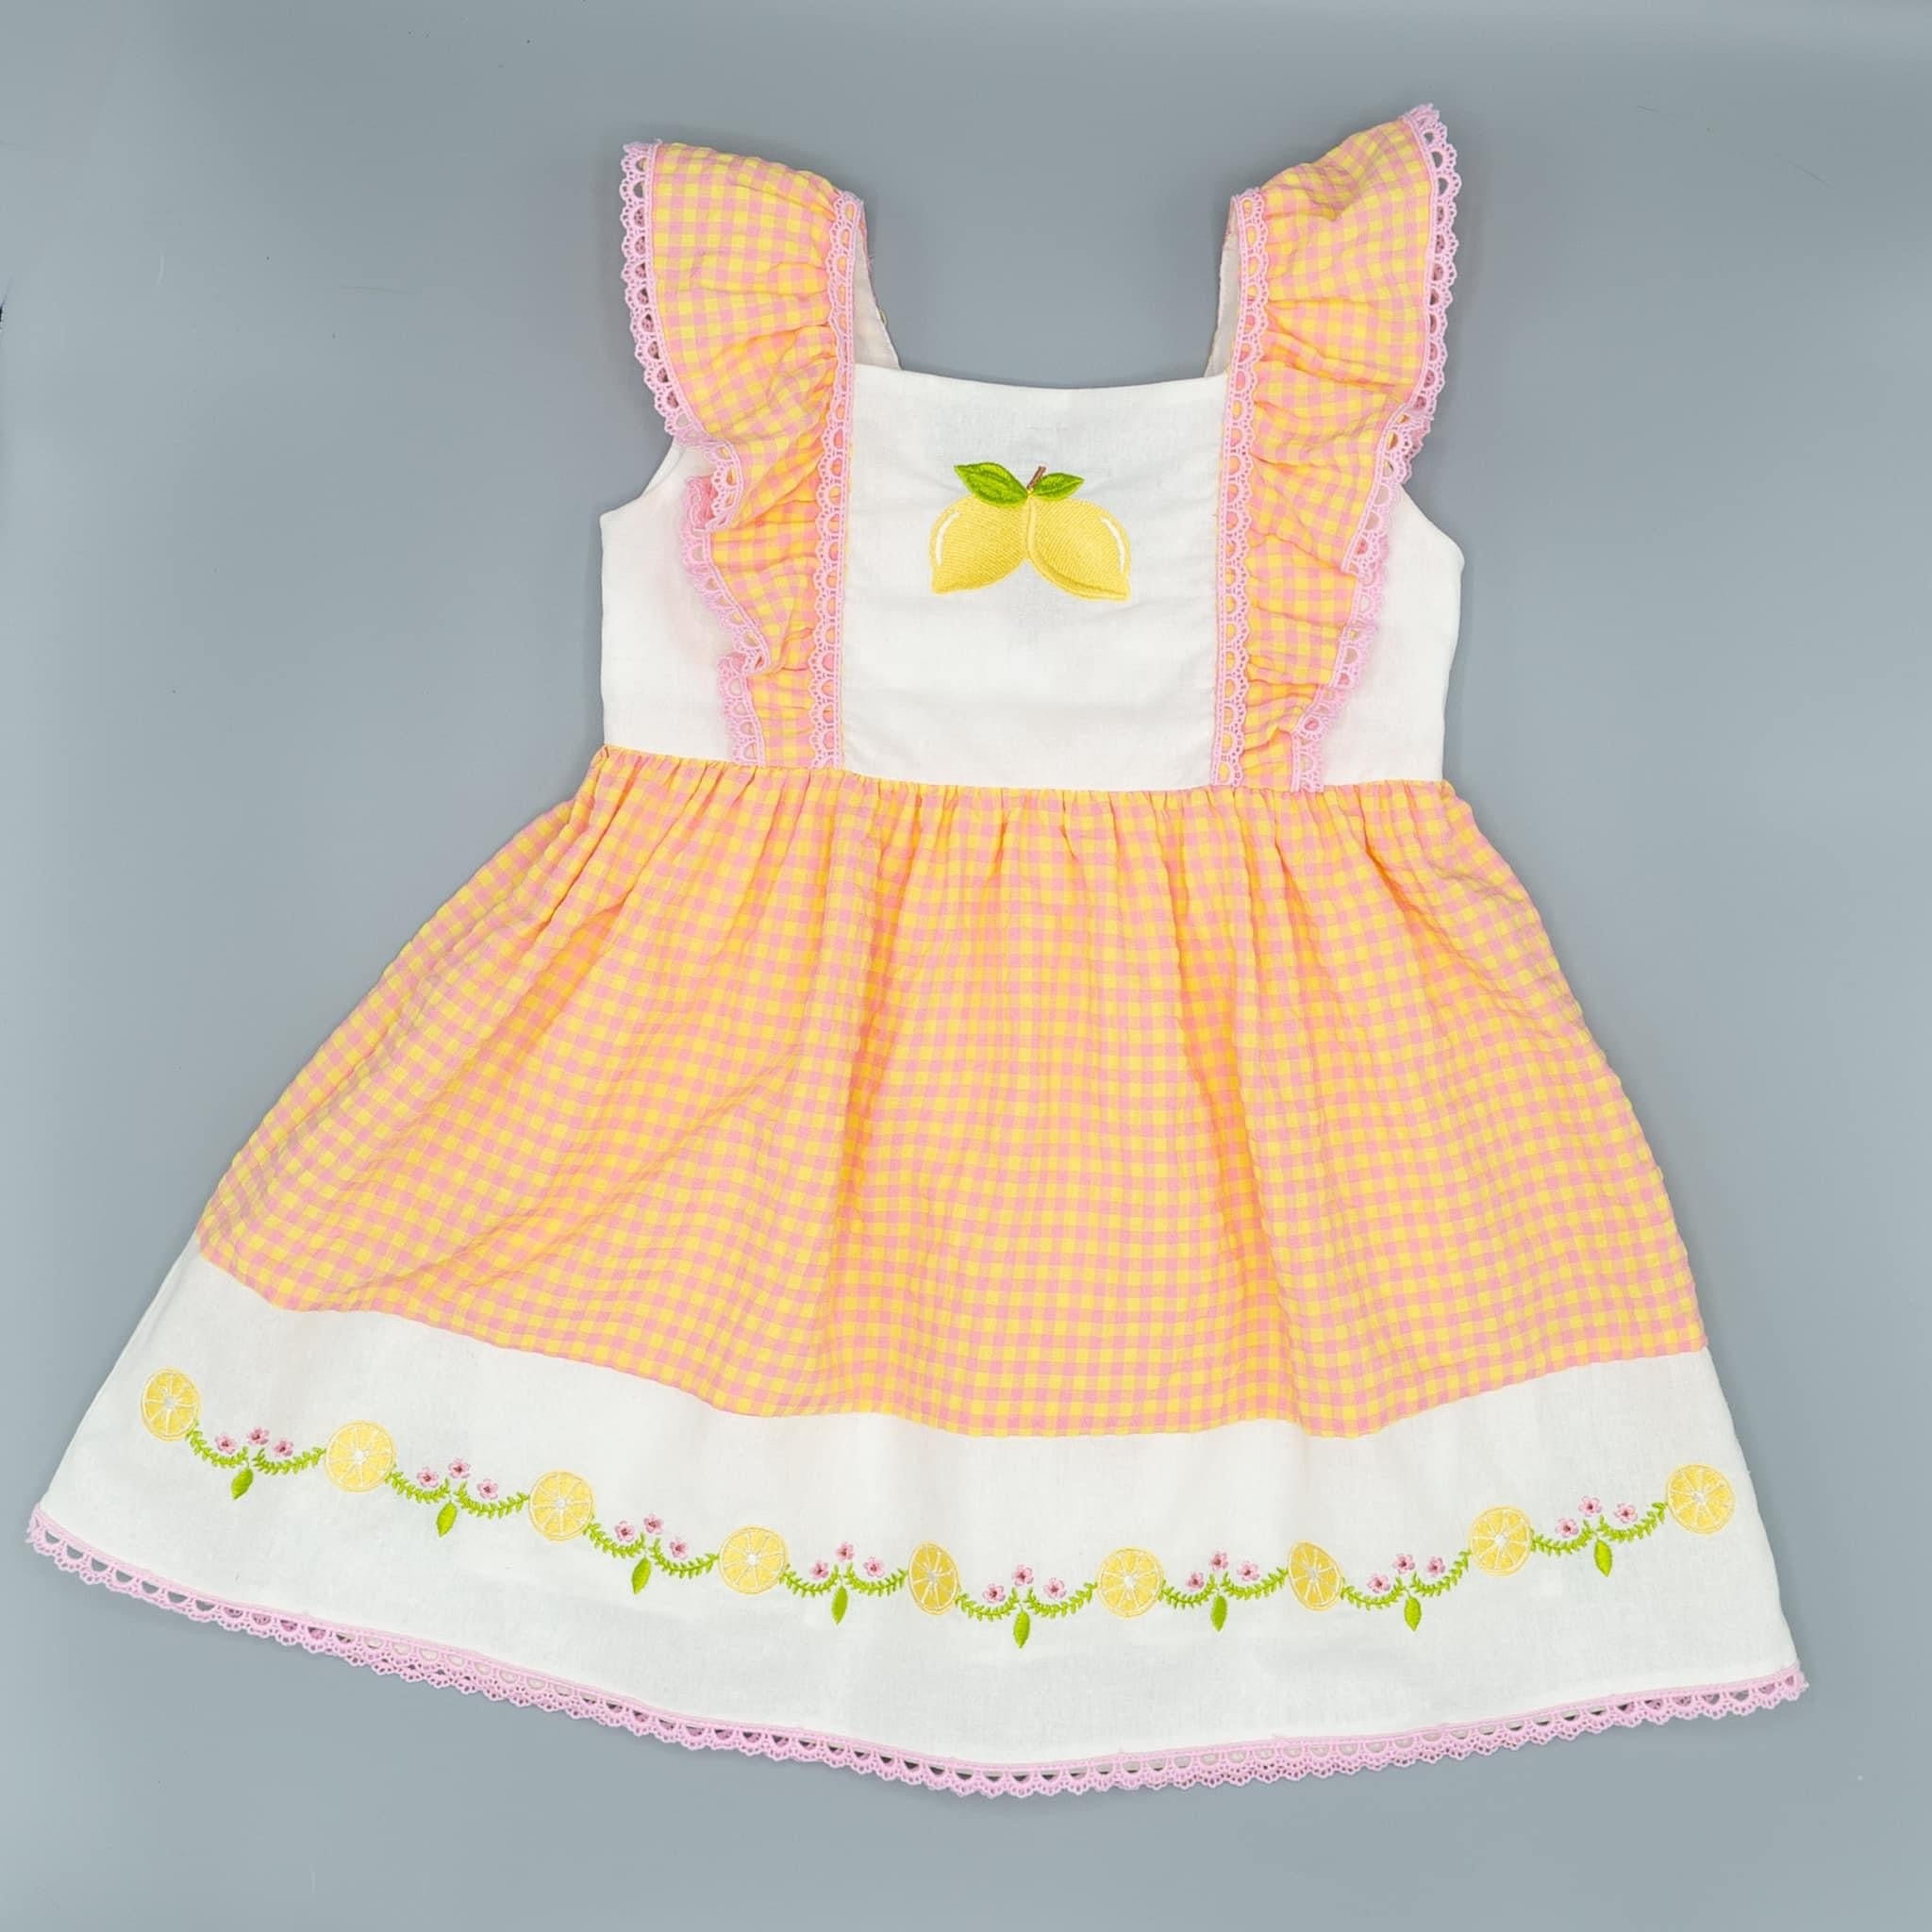 Lemon Love Dress - Evie's Closet Clothing